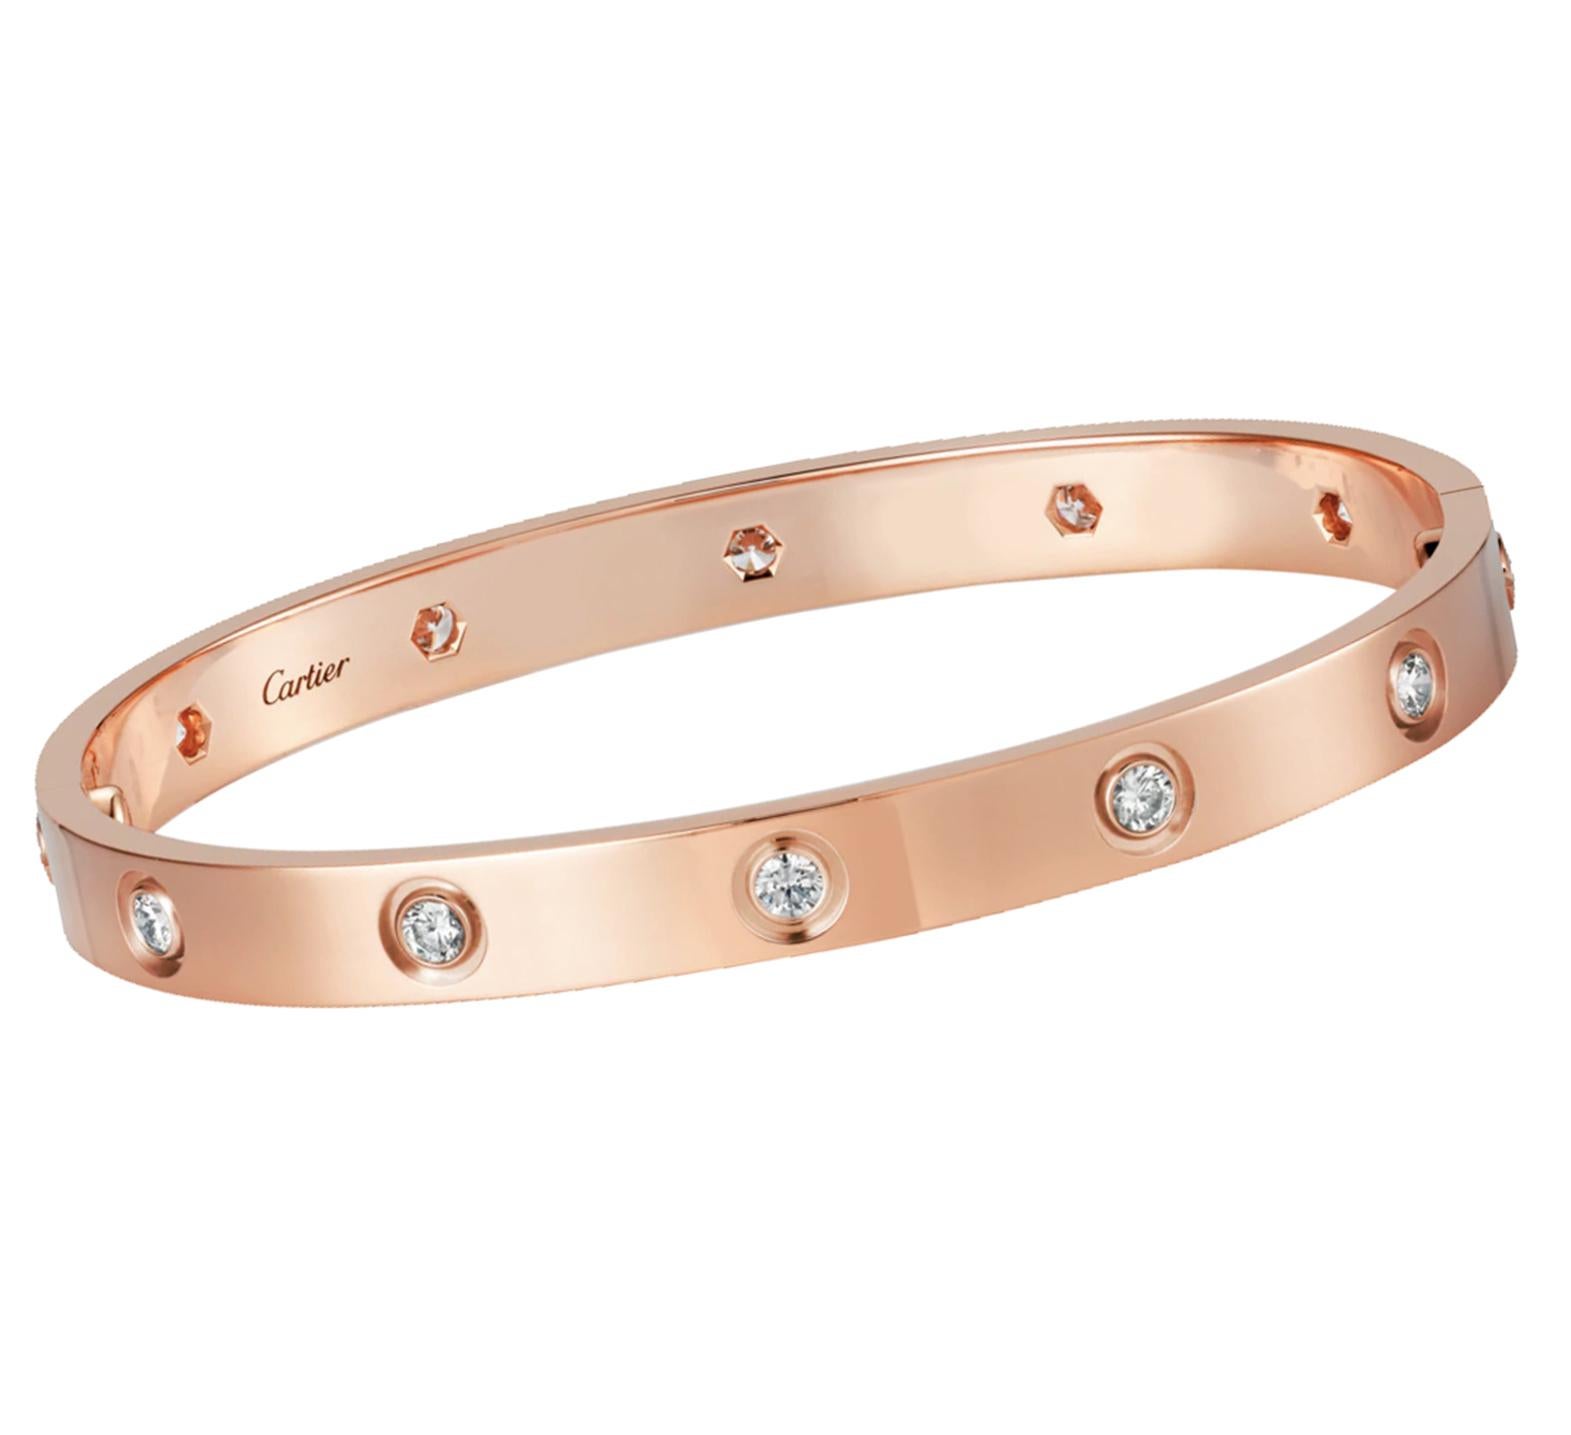 rose gold cartier bracelet with diamonds